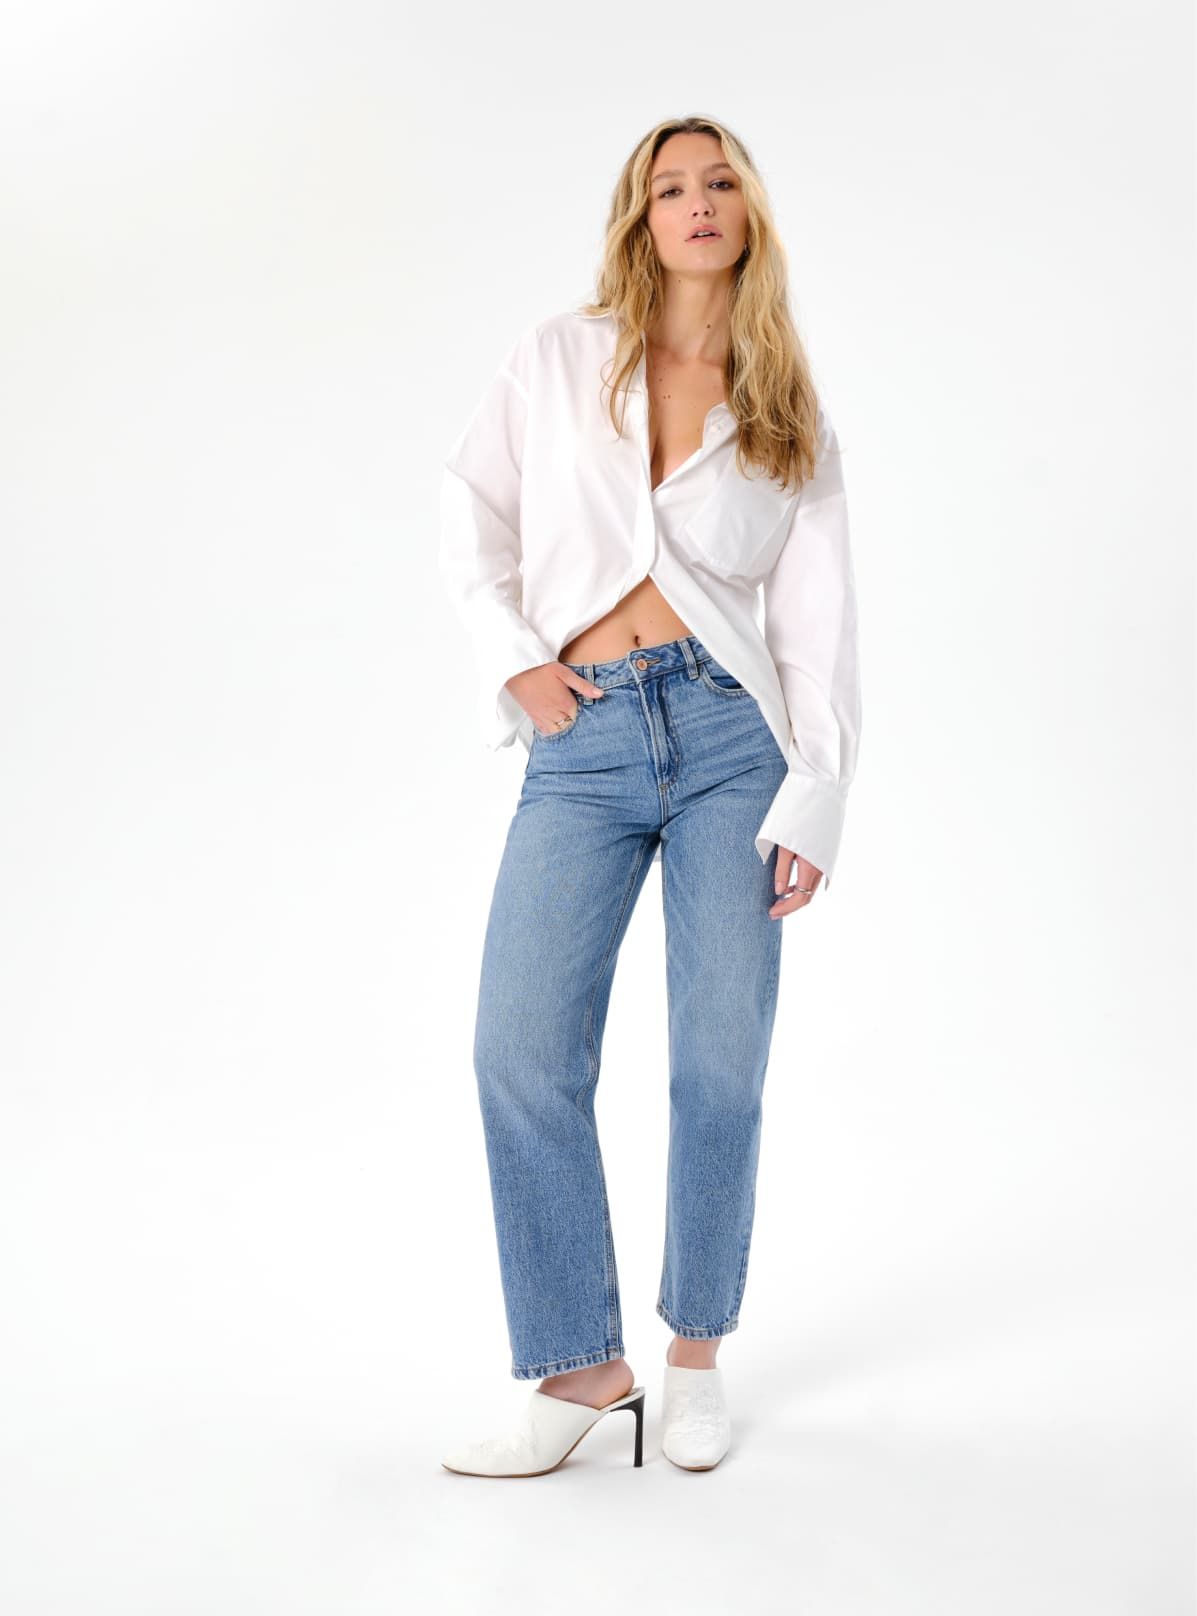 Women's Jeans | Denim Pants, Jackets, Shorts | Dynamite CA